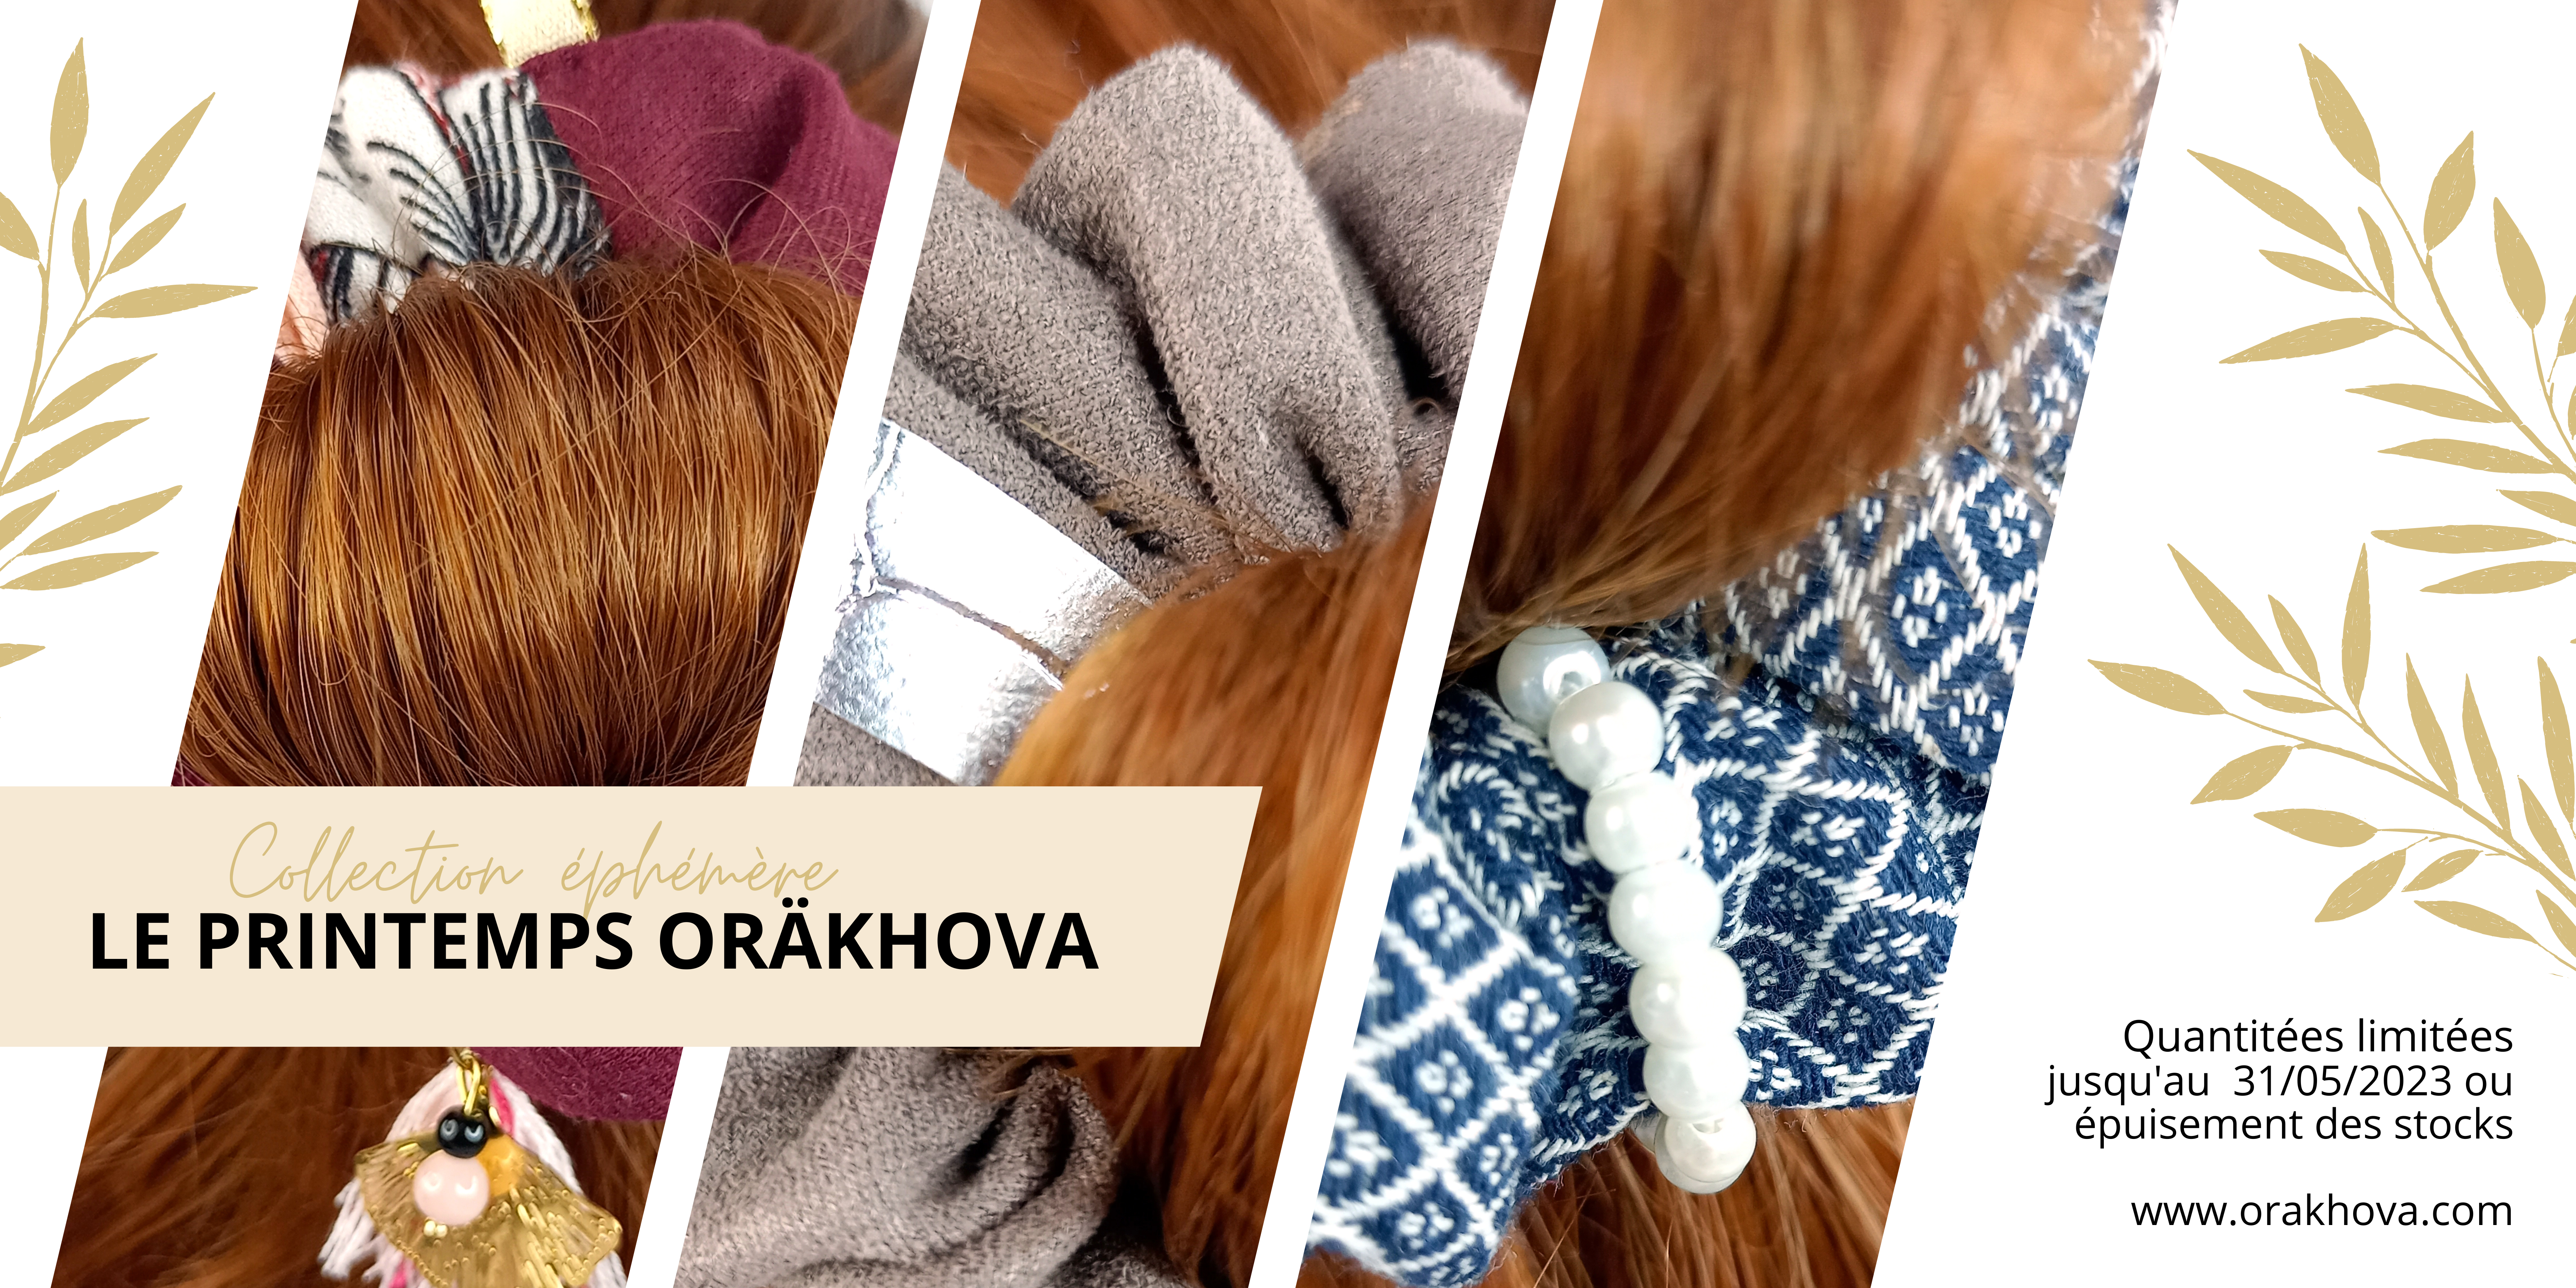 www.orakhova.com